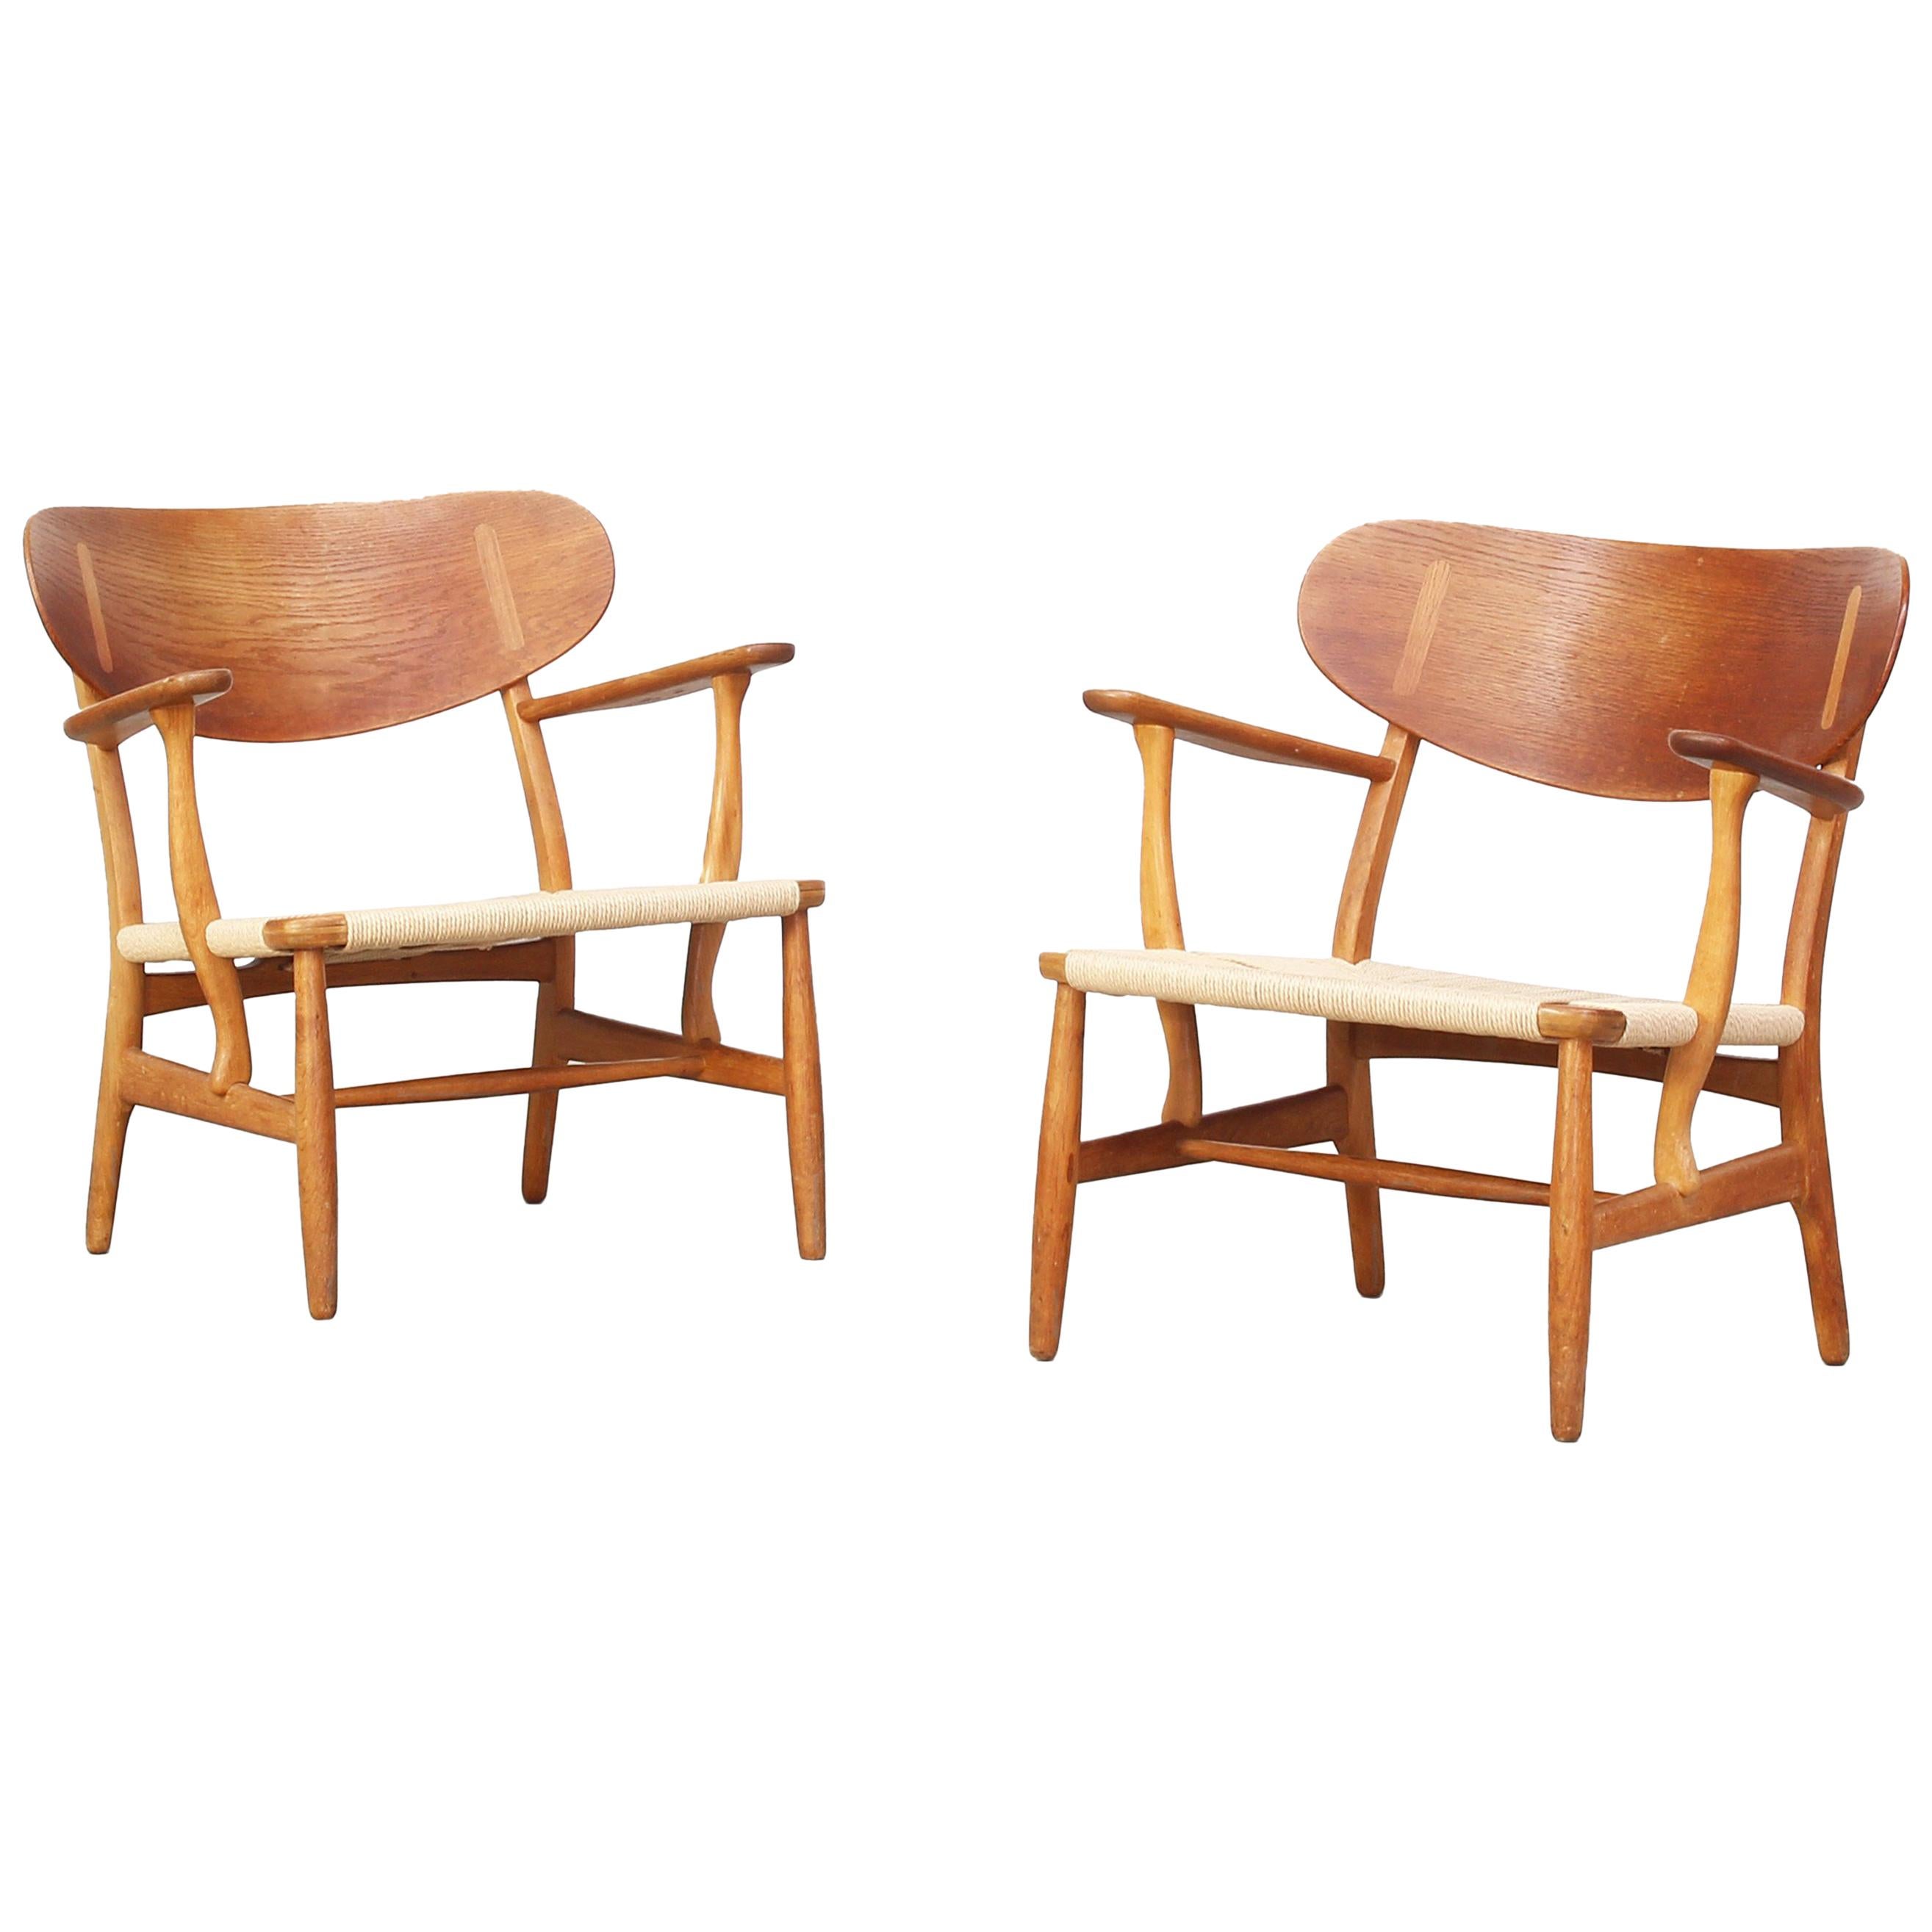 Pair of Danish Lounge Chairs by Hans J. Wegner for Carl Hansen CH 22 Oak